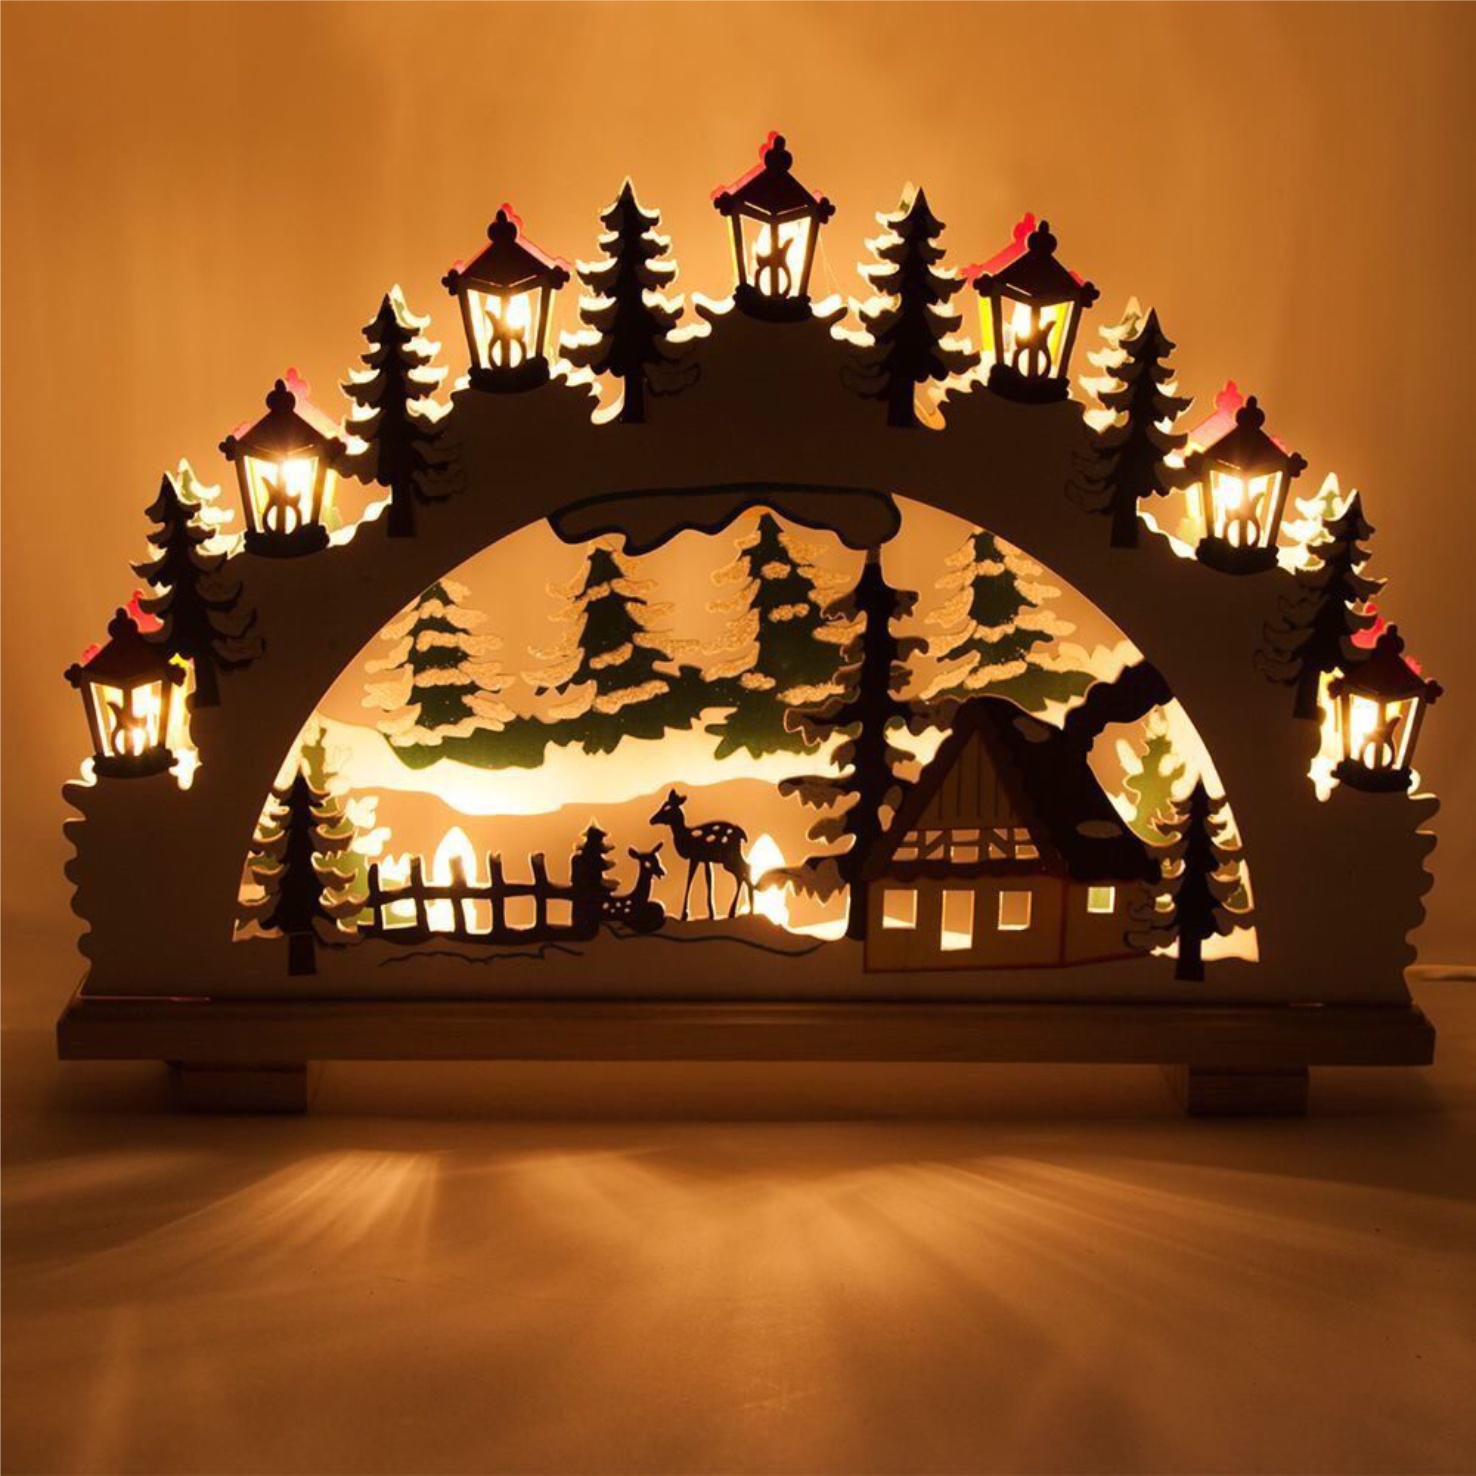 Laser Cut Christmas Ornaments Lamp Night Scene Wooden Window Light Free Vector